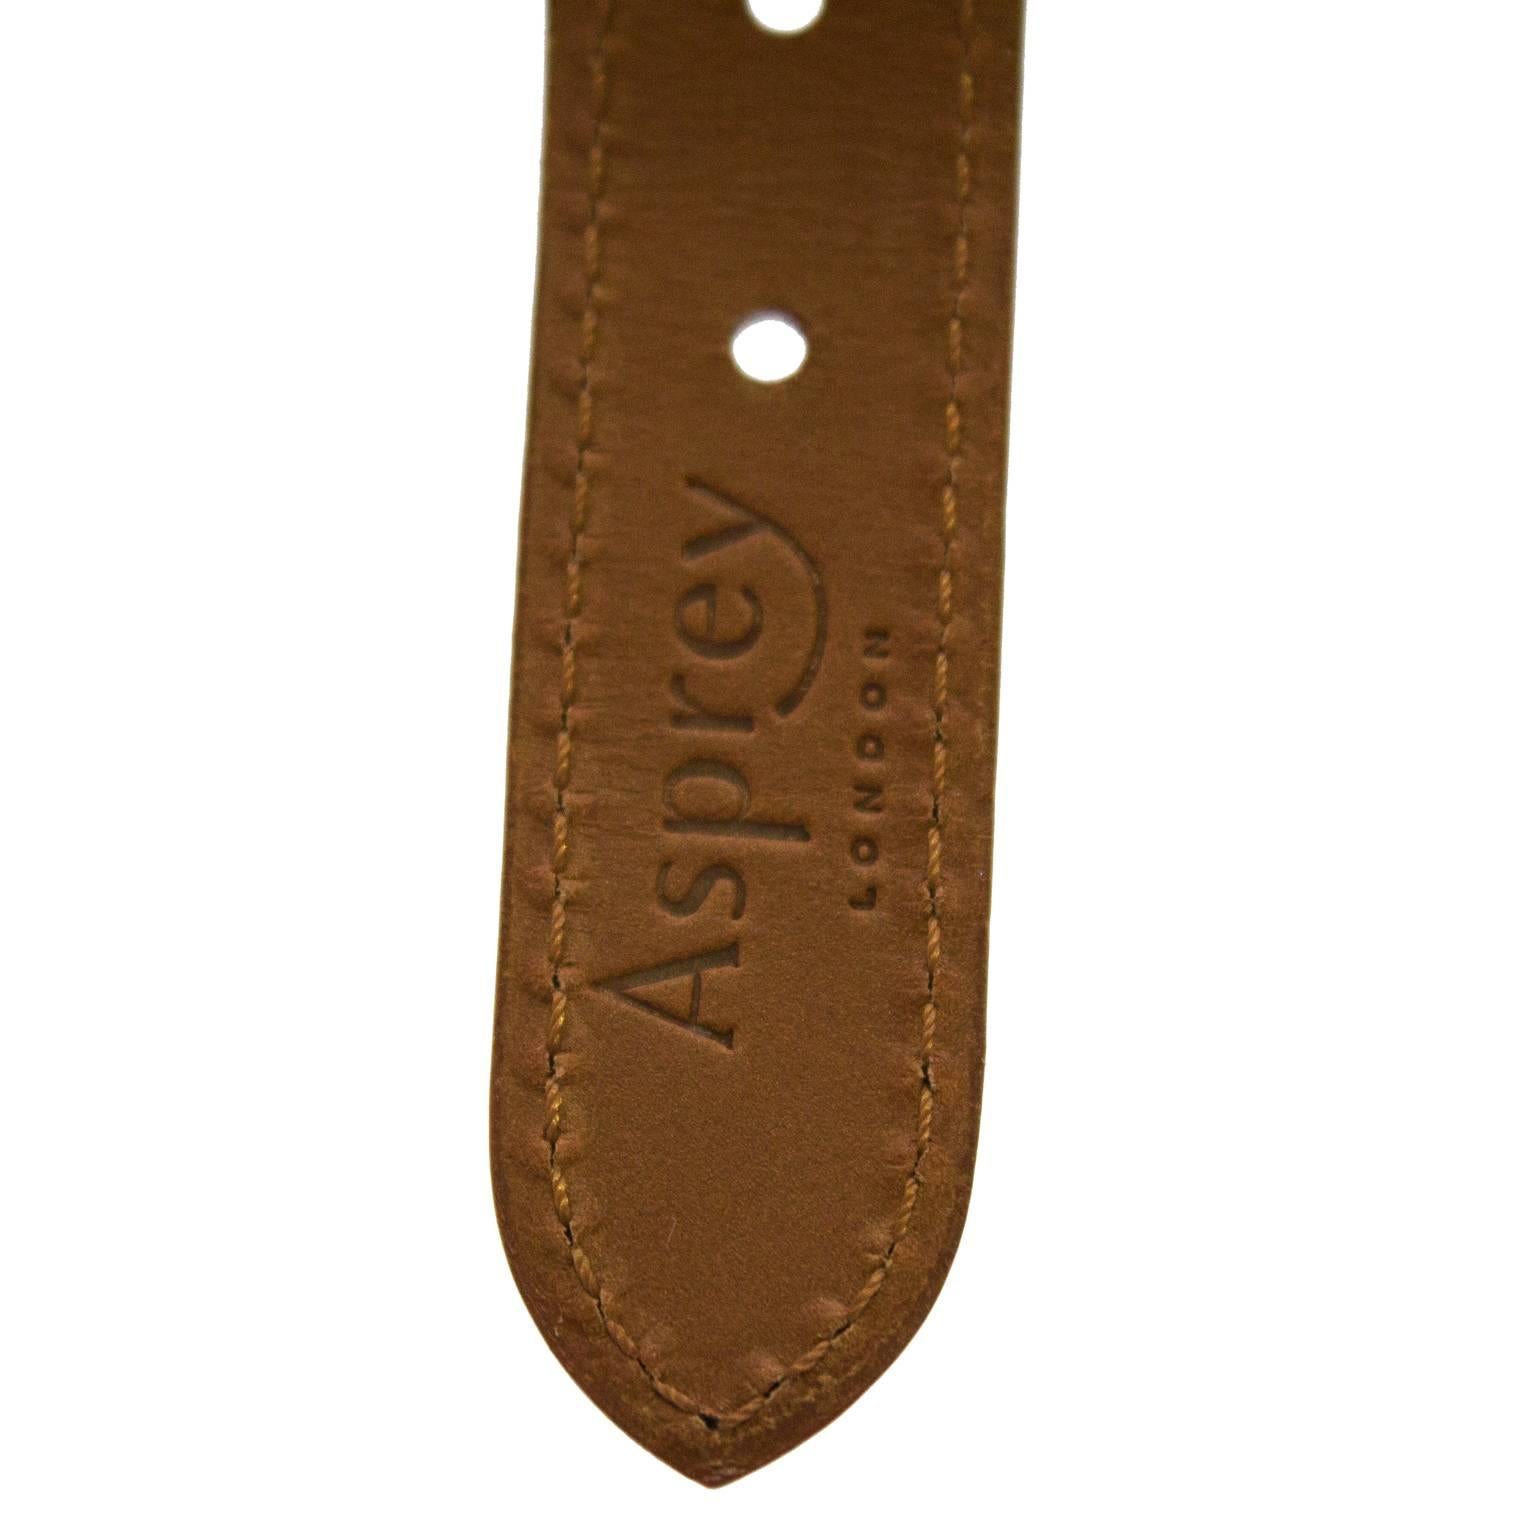 Circa 2000 Asprey Brown Leather Belt Buckle  1